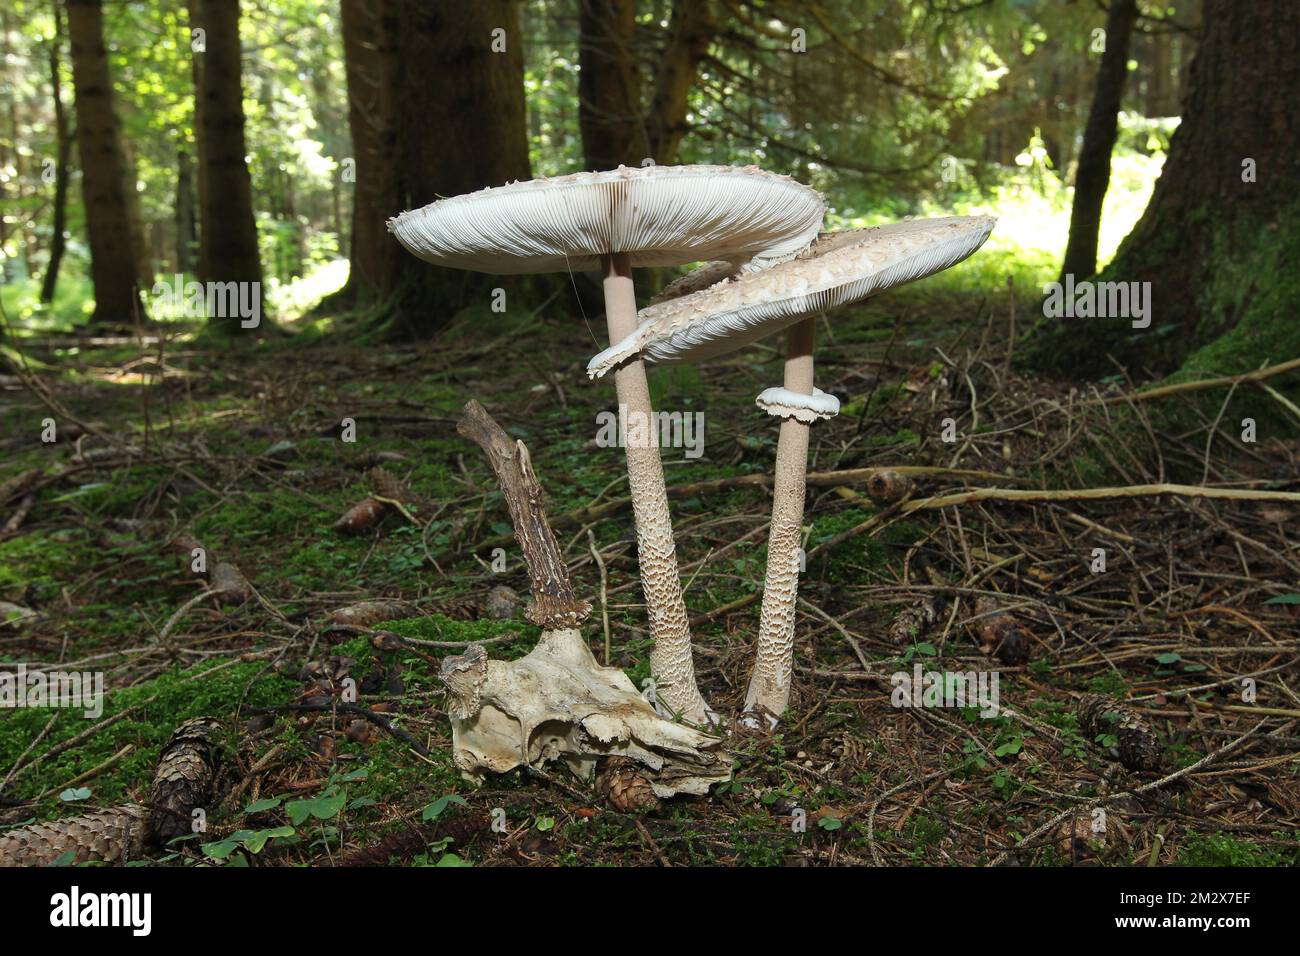 Parasol or common giant parasol mushroom (Macrolepiota procera) growing next to old european roe deer (Capreolus capreolus) Allgaeu, Bavaria, Germany Stock Photo